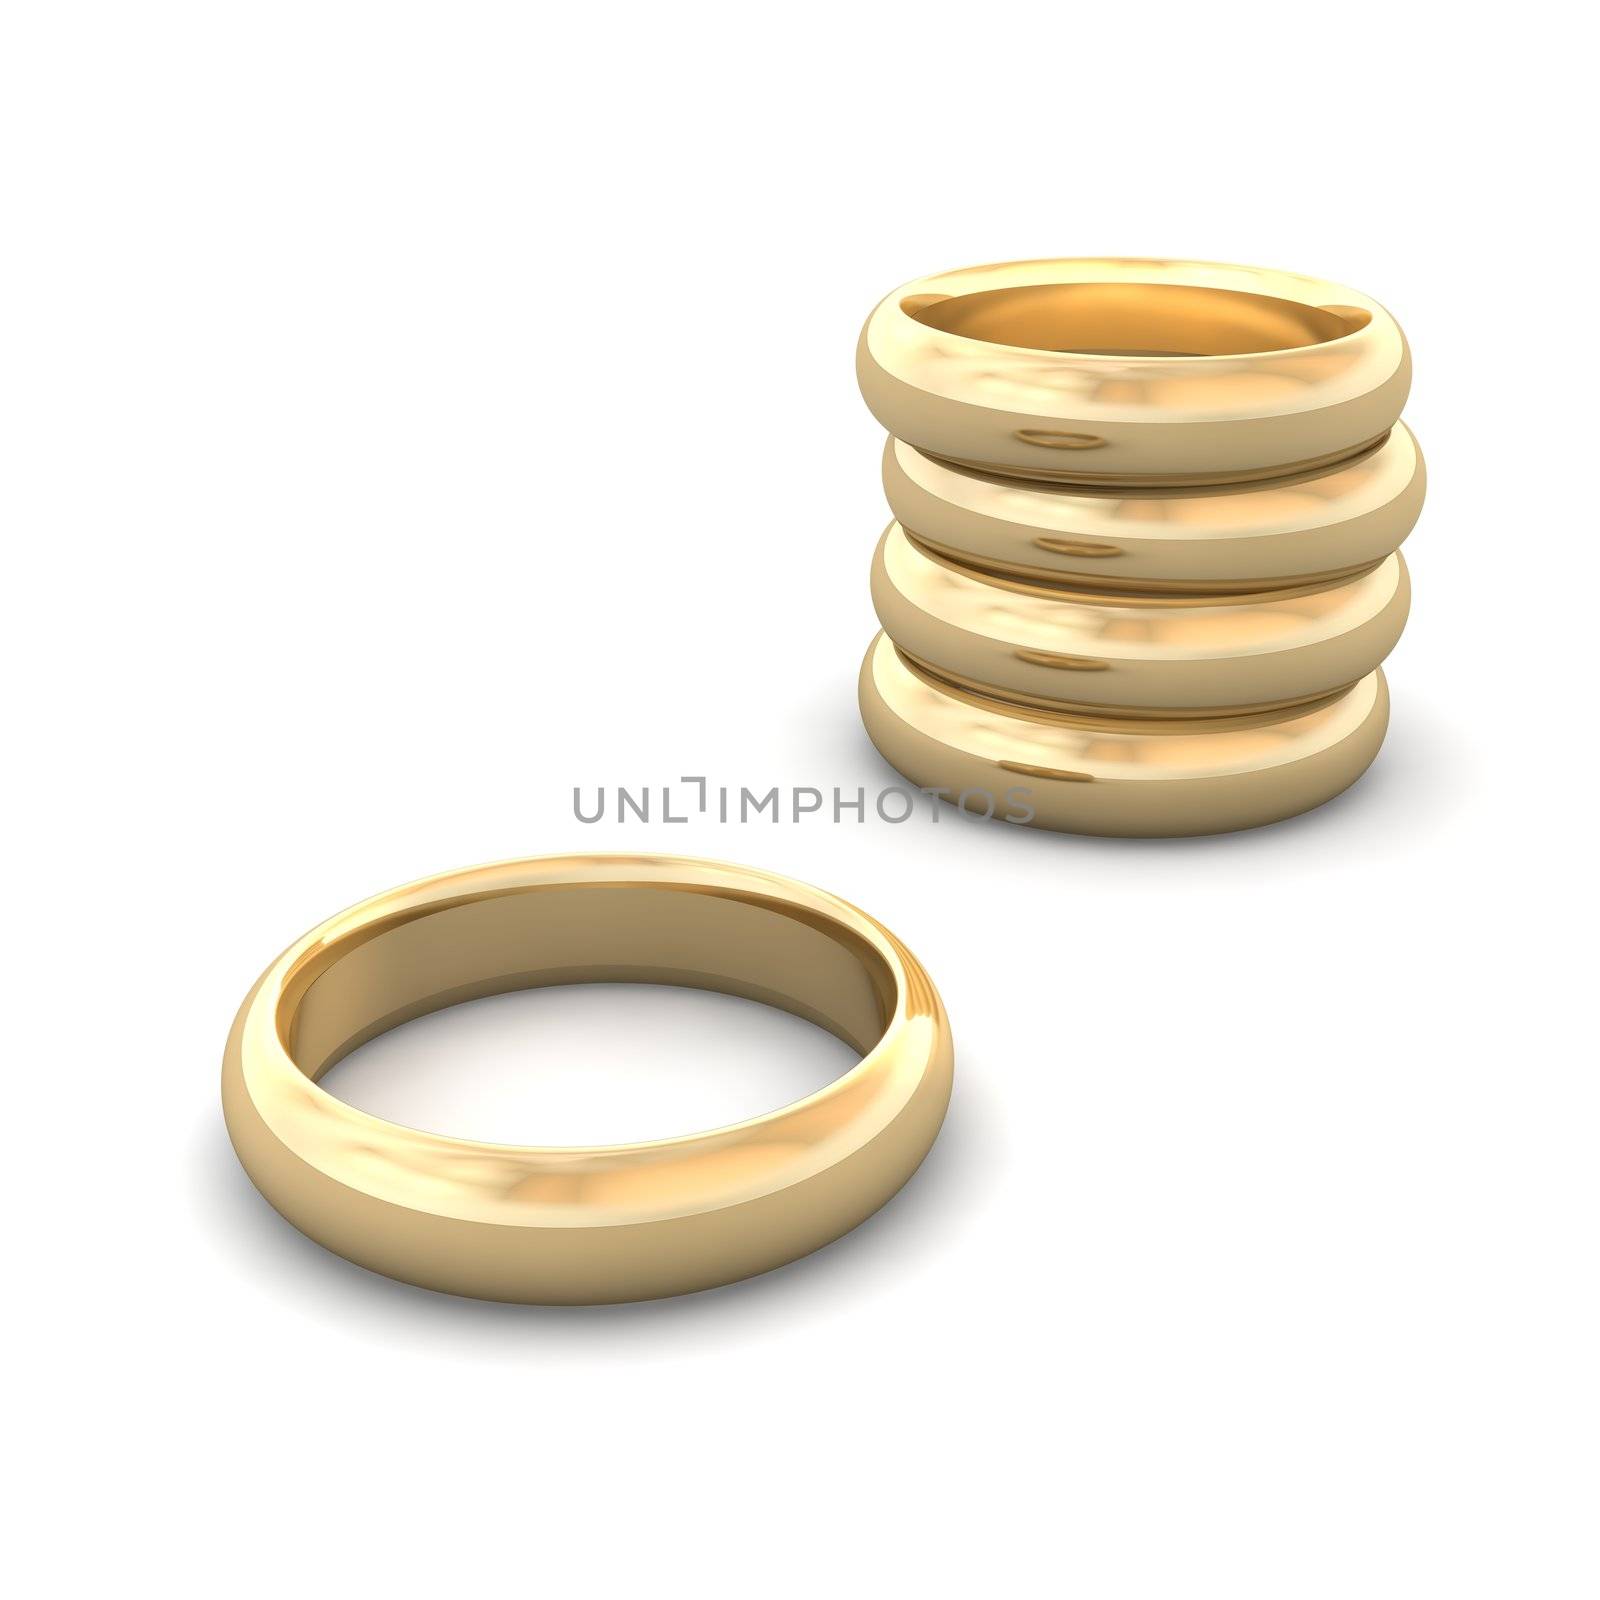 Golden wedding rings by skvoor